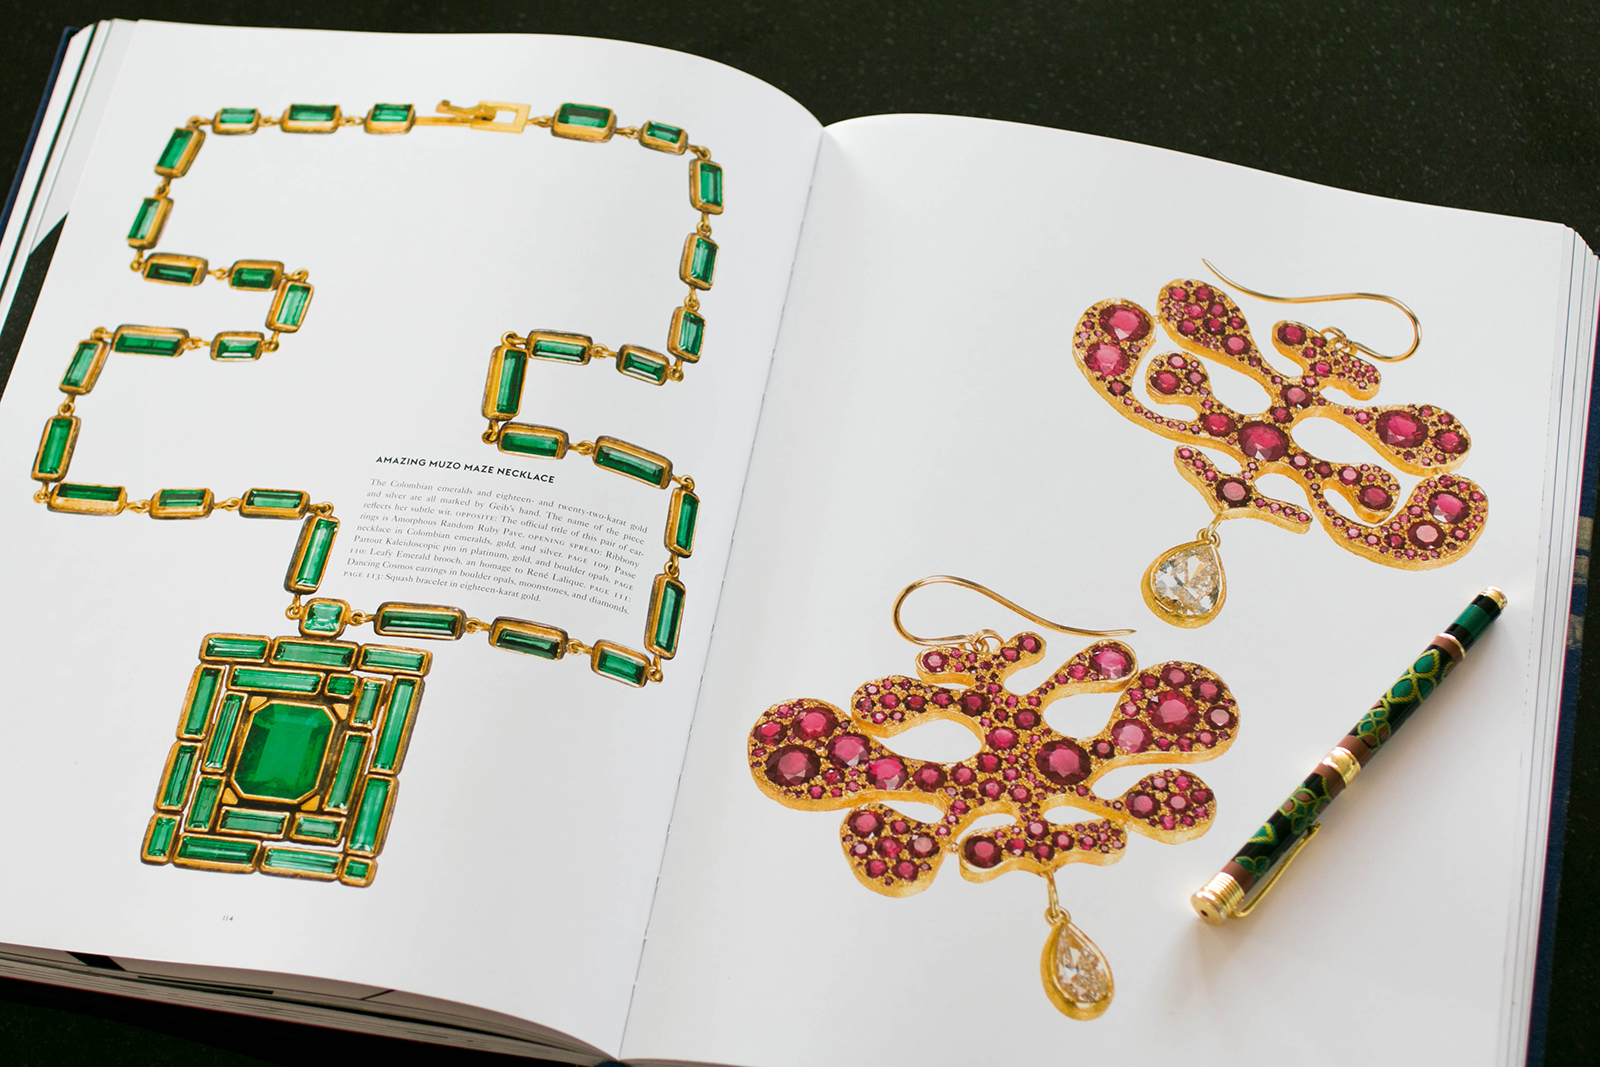 Judy Geib jewellery in 'Jeweler' by Stellene Volandes